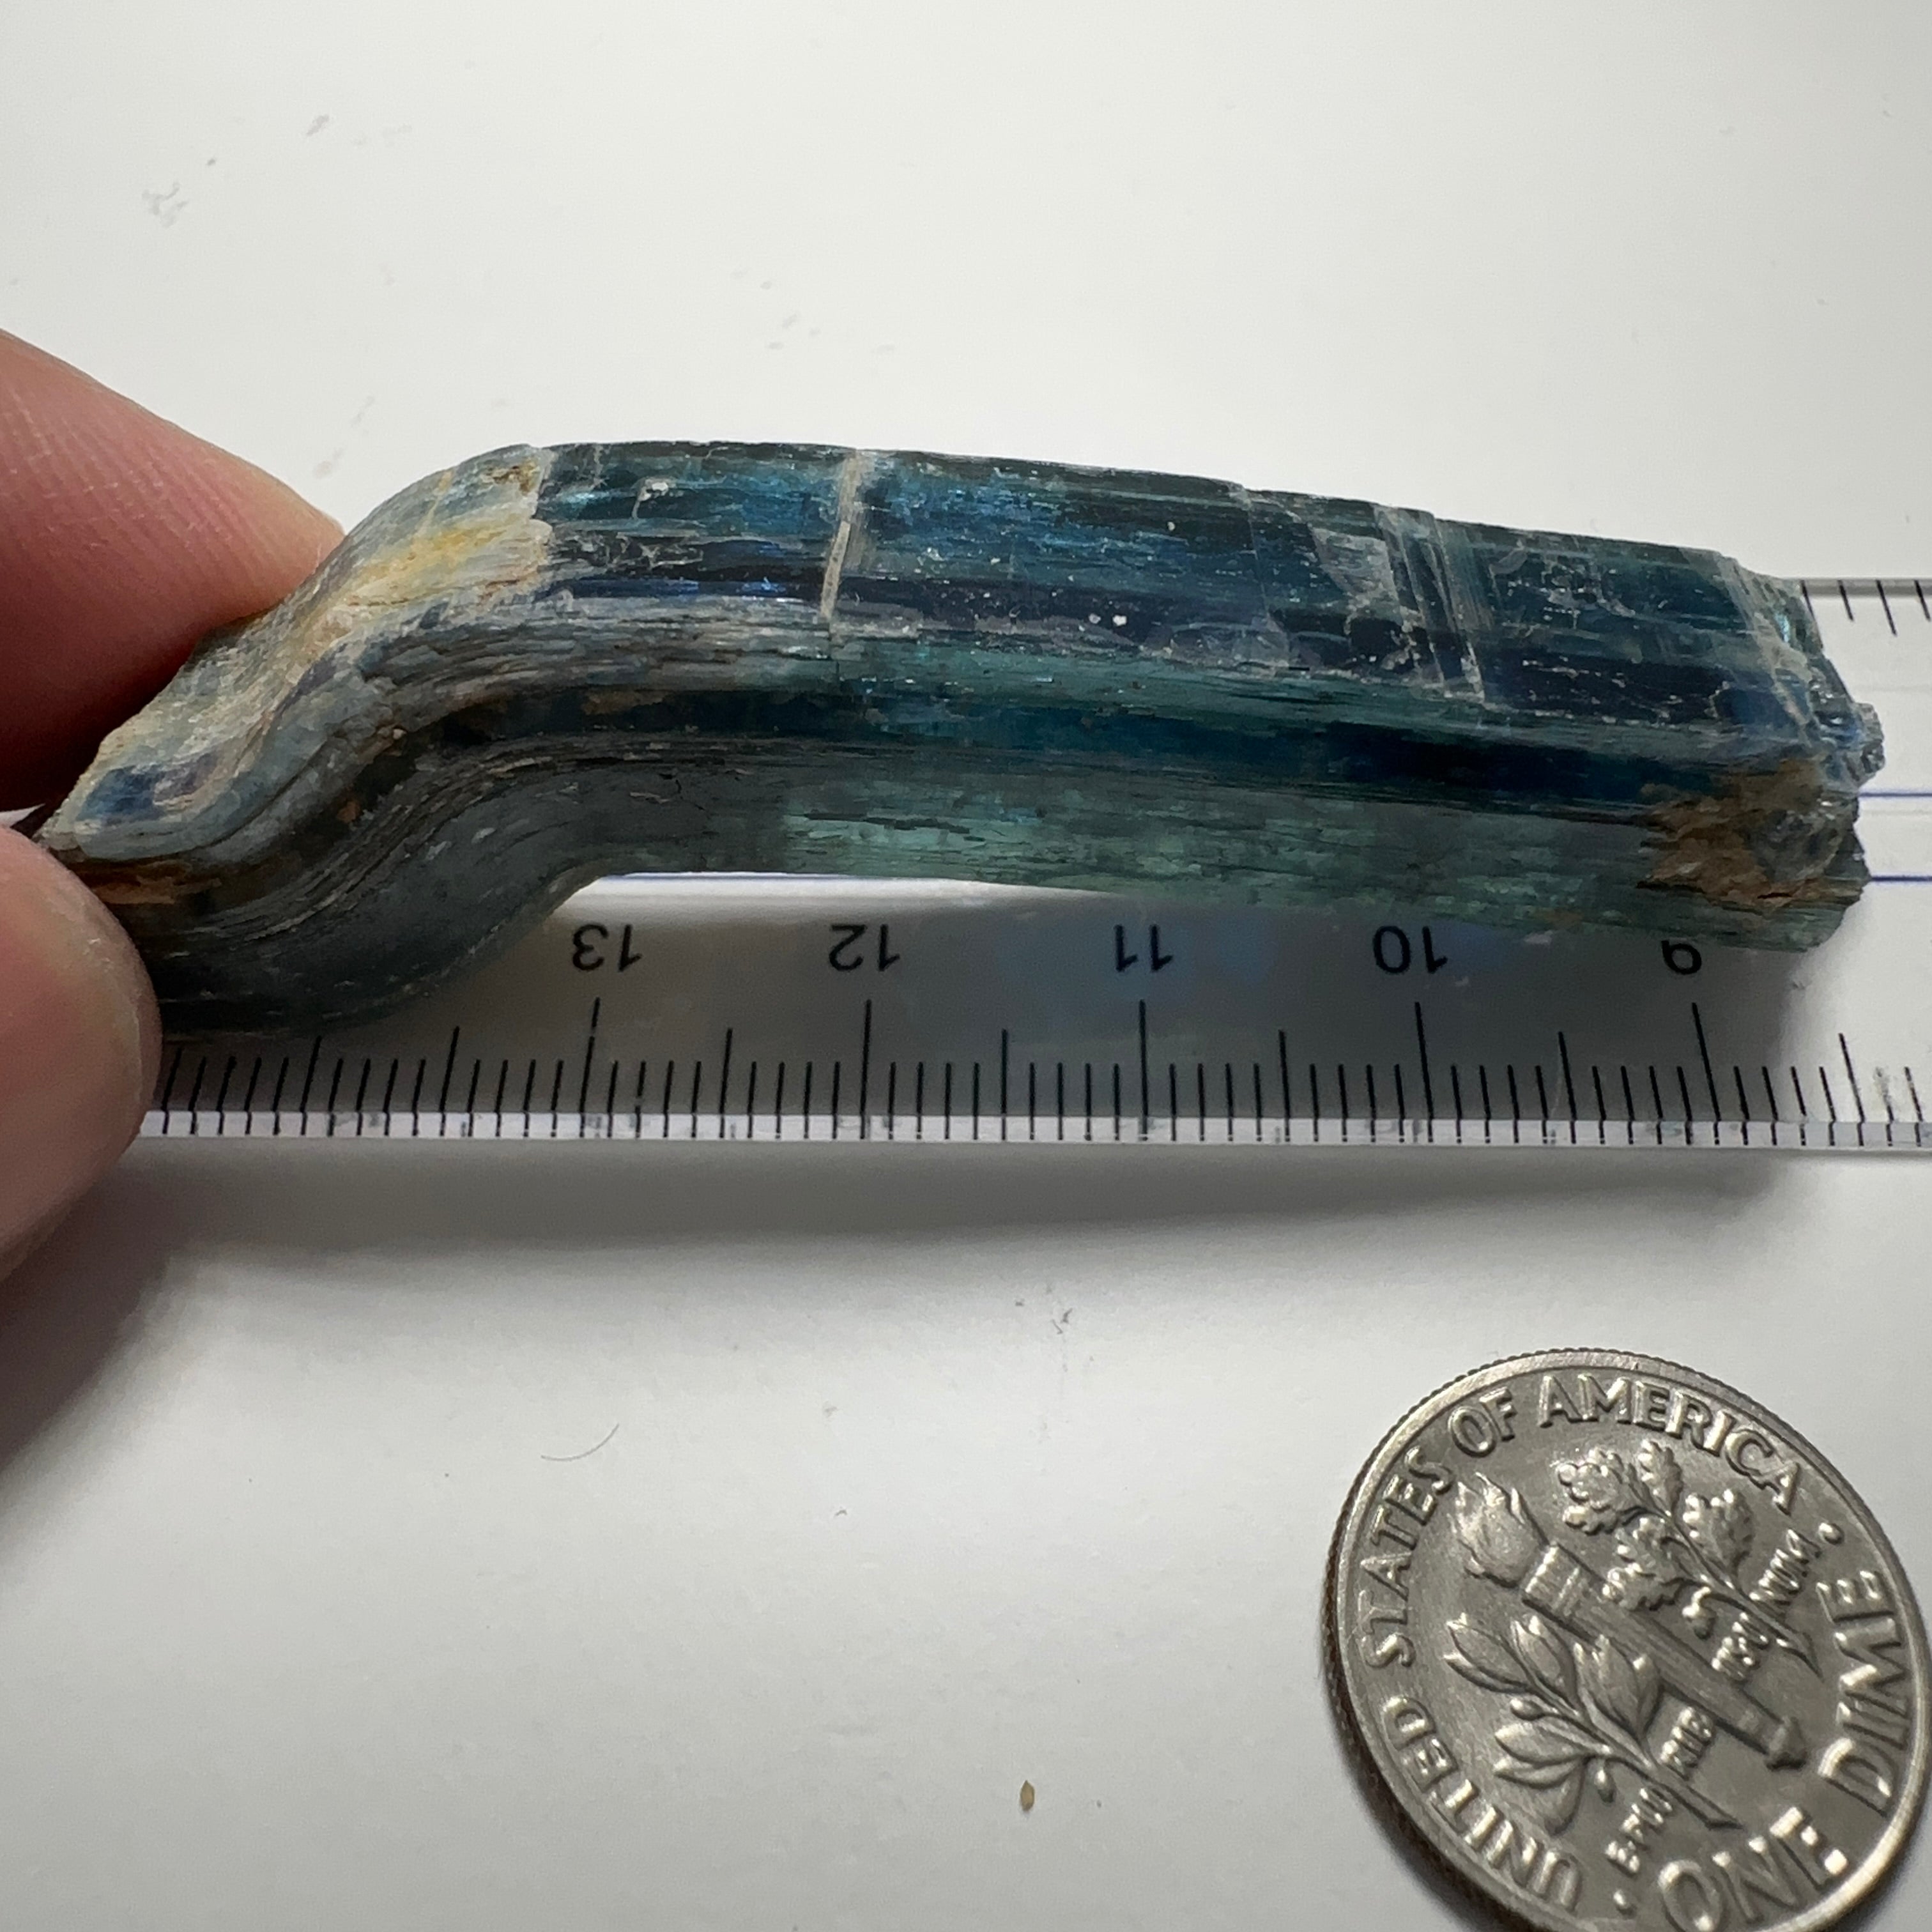 137.45ct Blue Kyanite Crystal, Kenya, Untreated Unheated, naturally curved